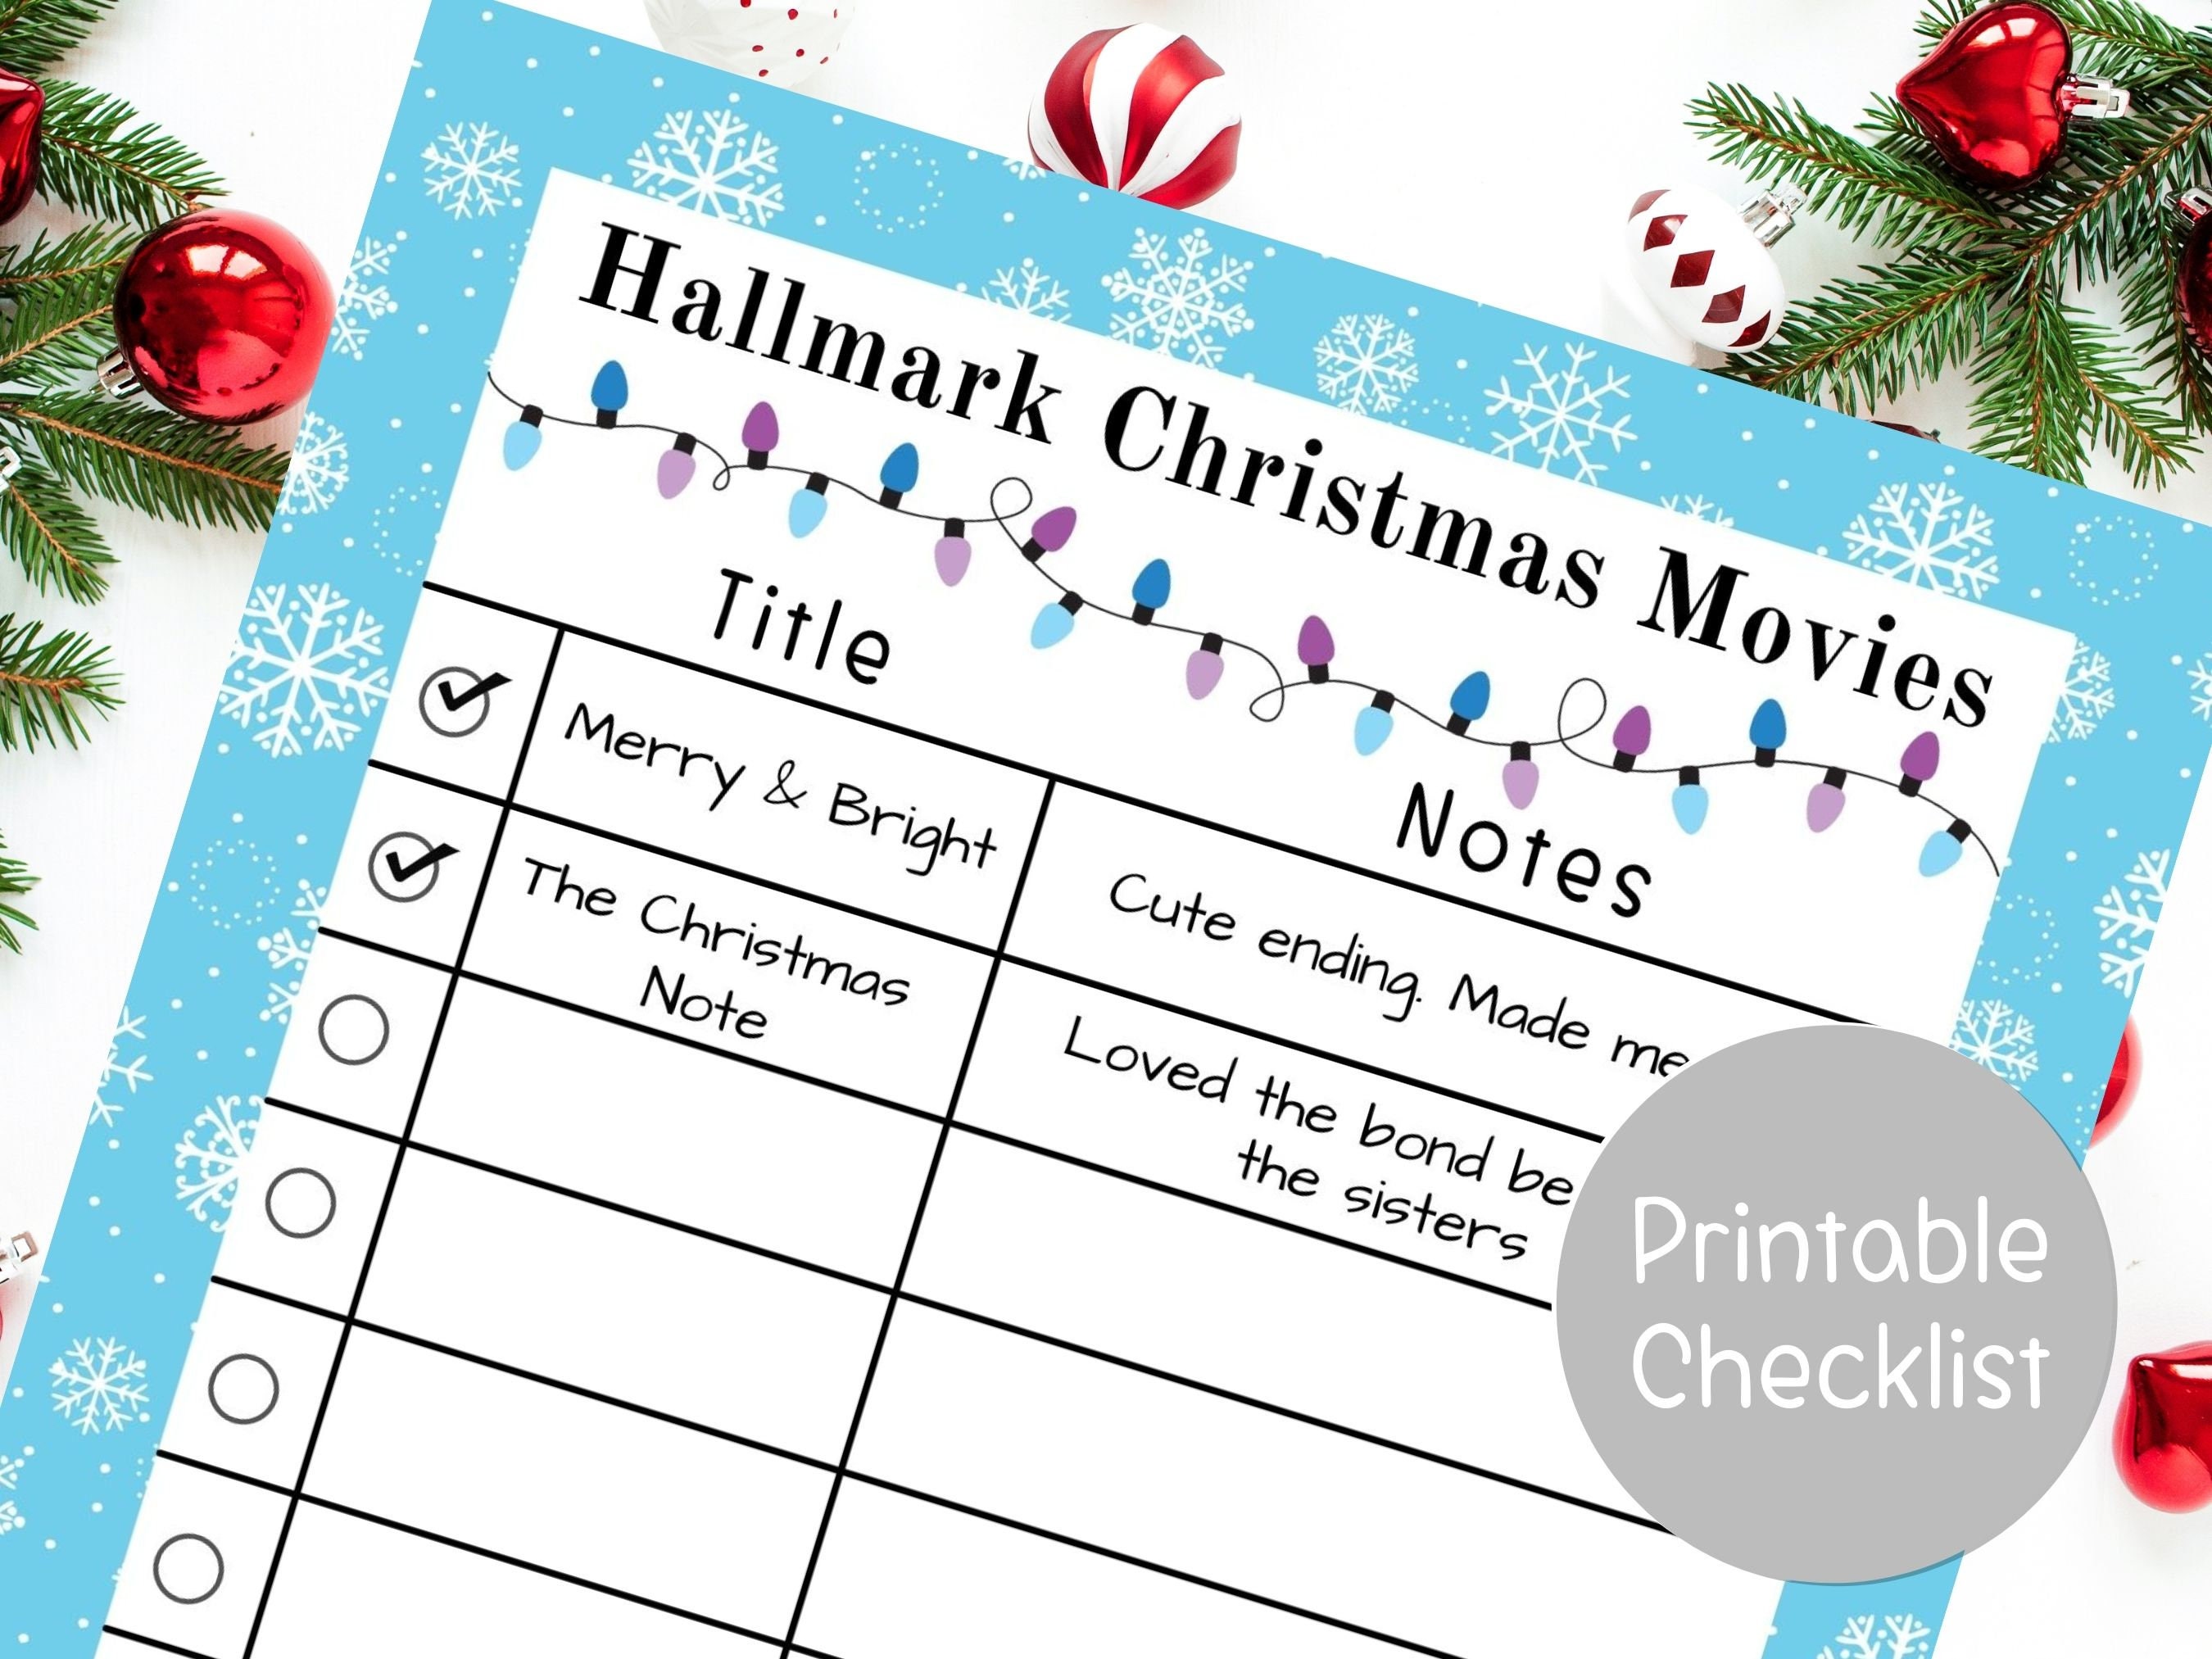 Hallmark Channel Christmas Movies Schedule Printable Checklist Etsy